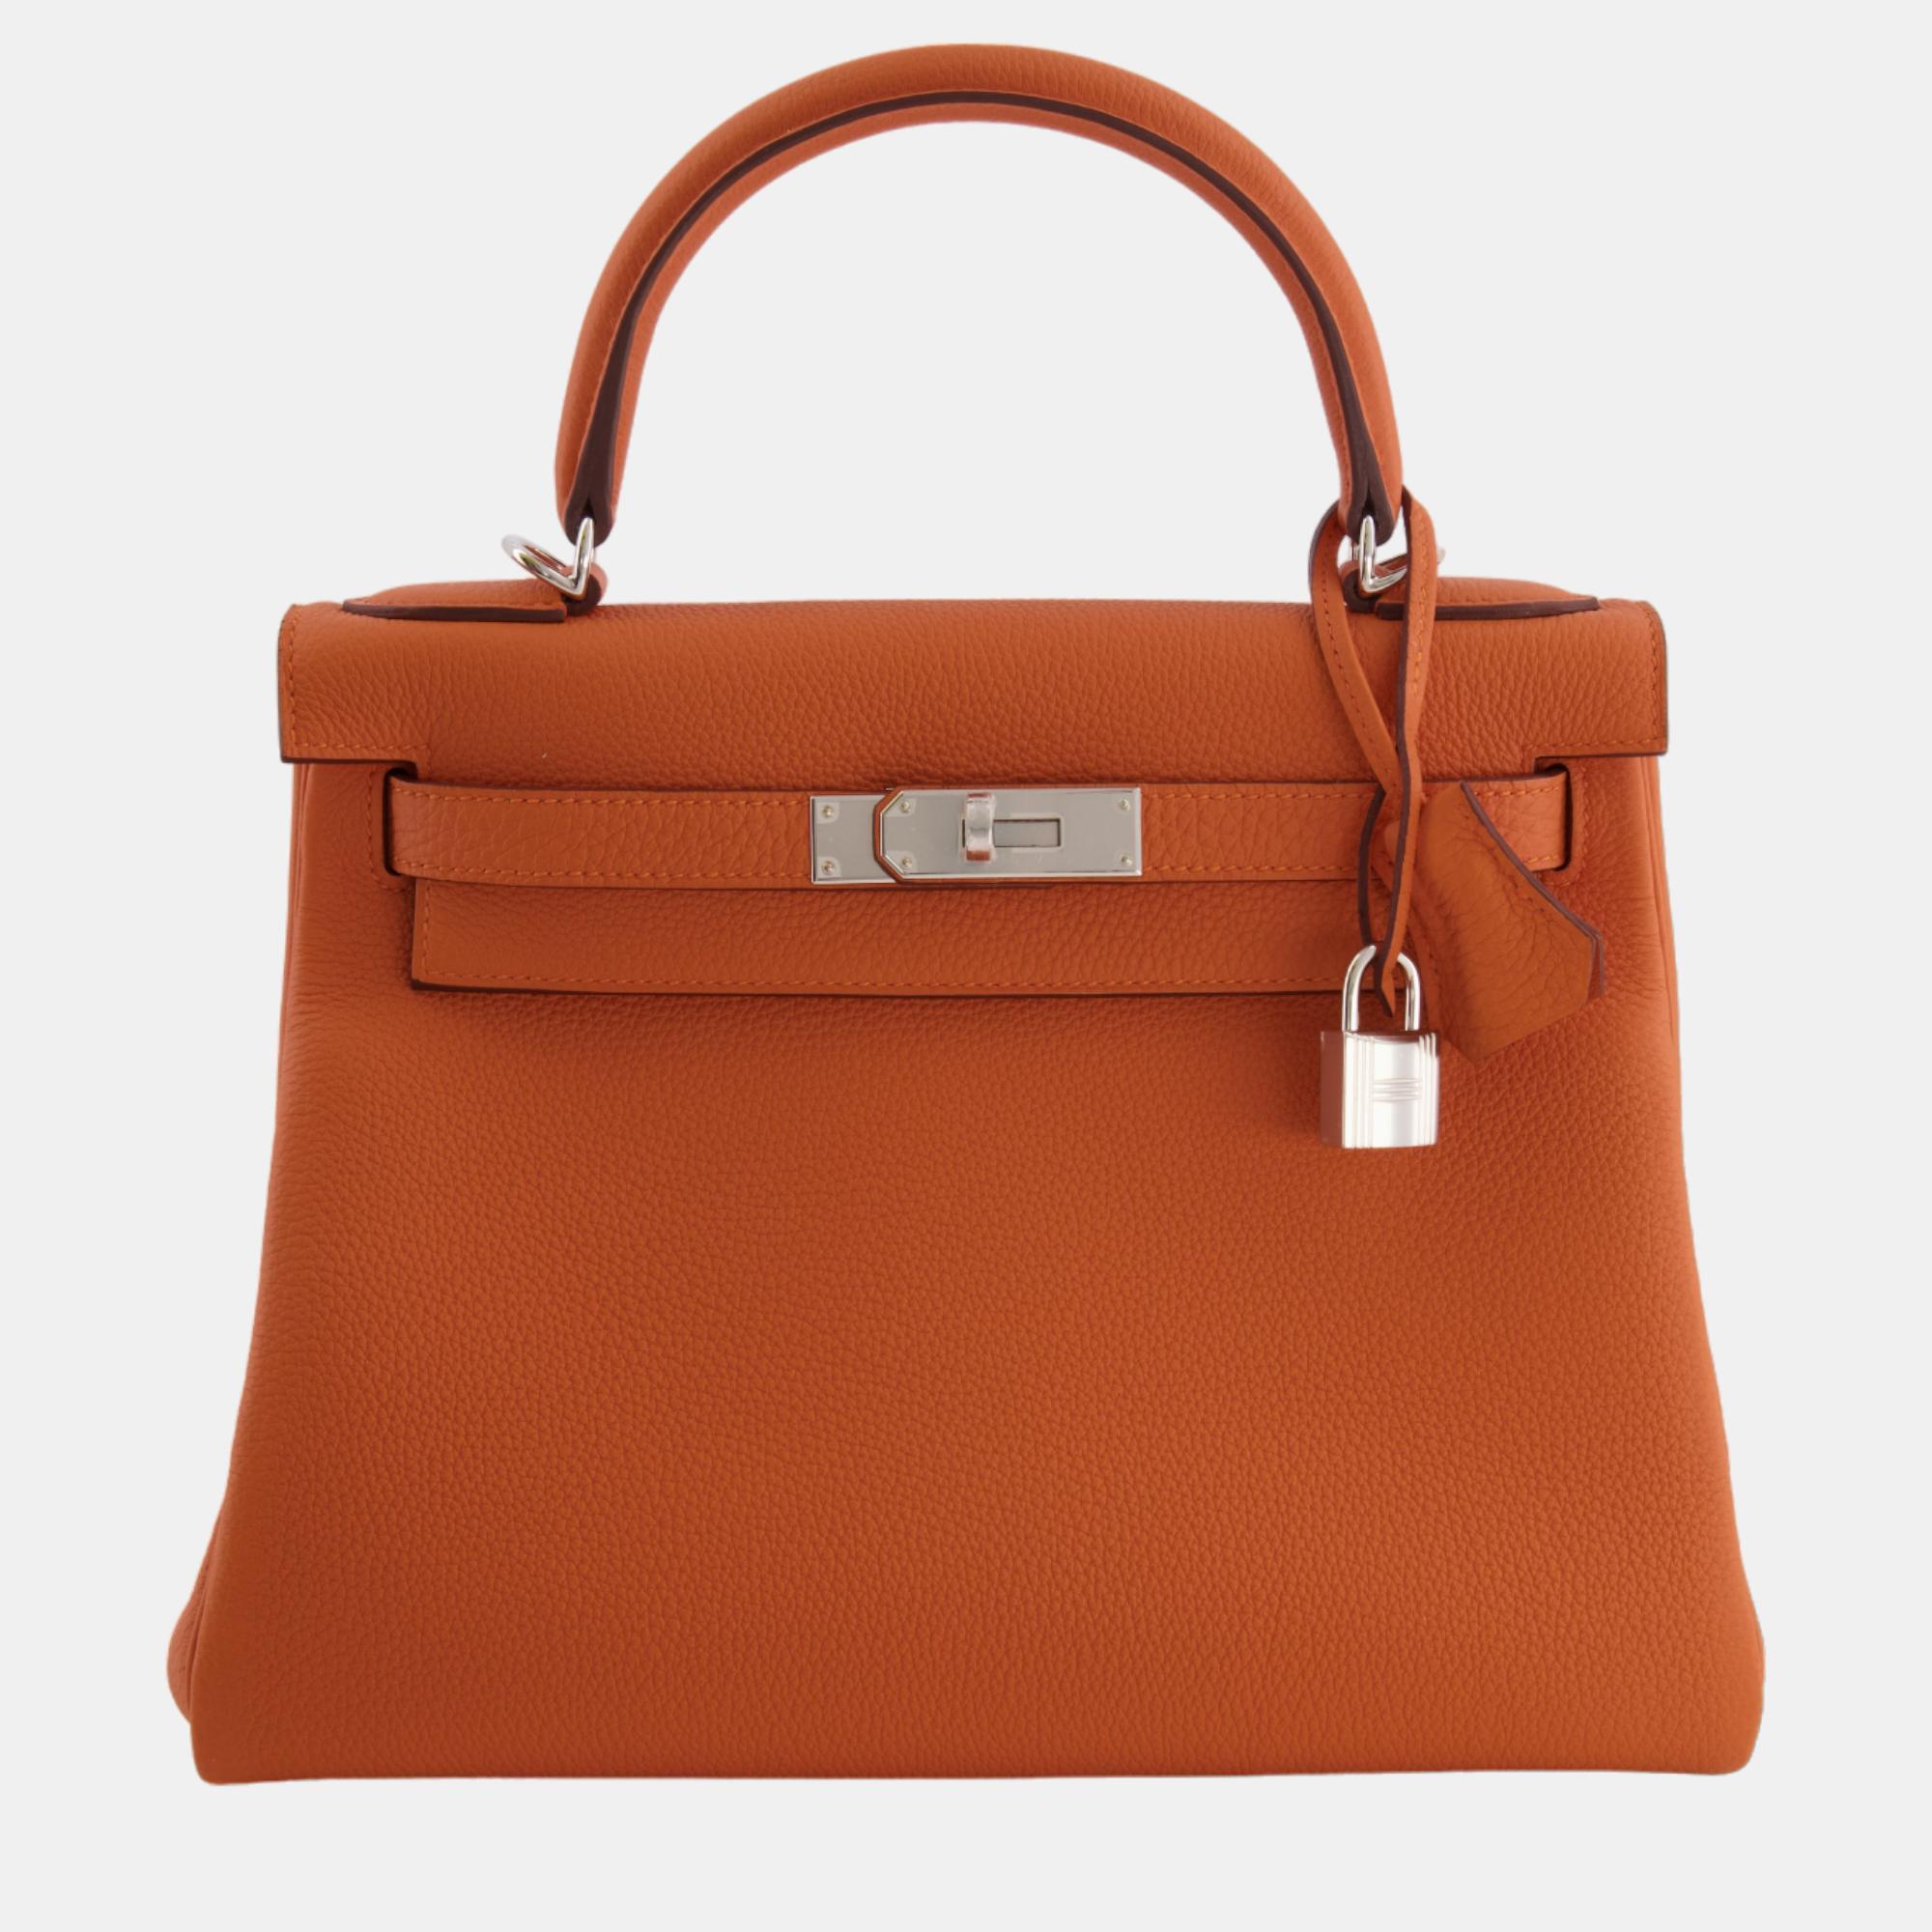 Hermes Kelly Retourne 28cm Bag In Orange Togo Leather With Palladium Hardware